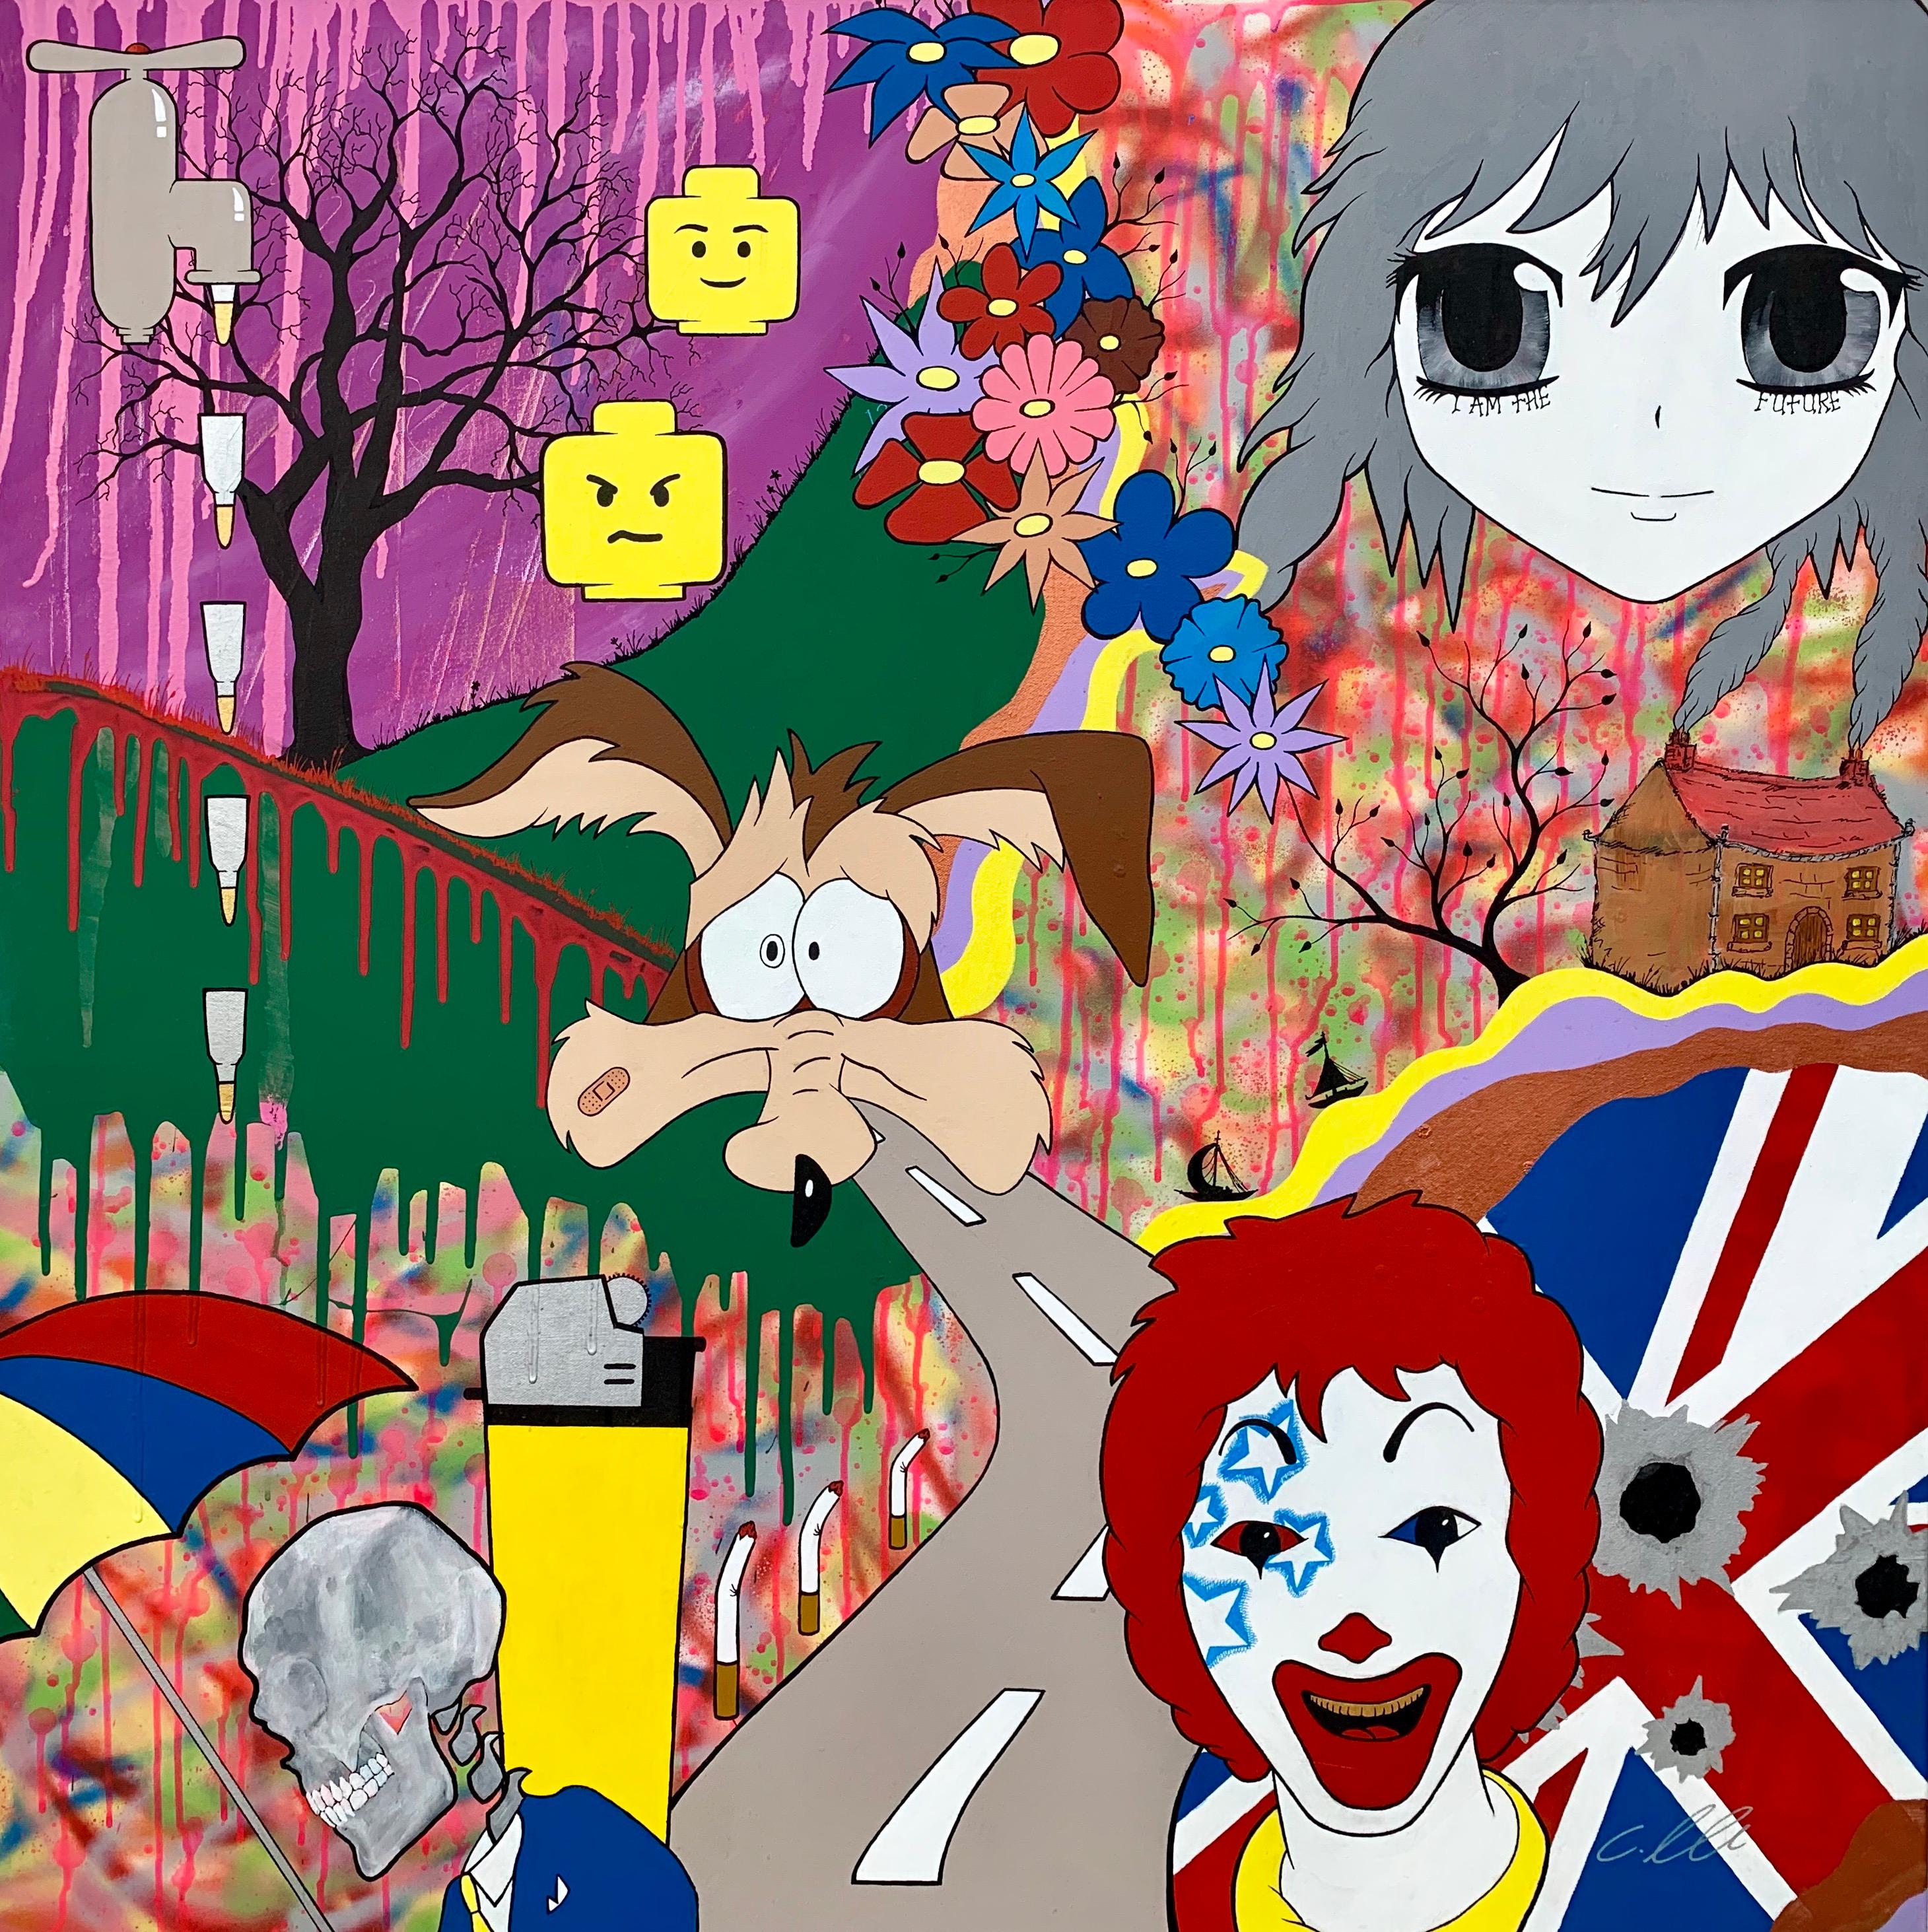 McFuture Colourful Manga Cartoon Pop Art by Young British Urban Graffiti Artist - Mixed Media Art by Chris Pegg